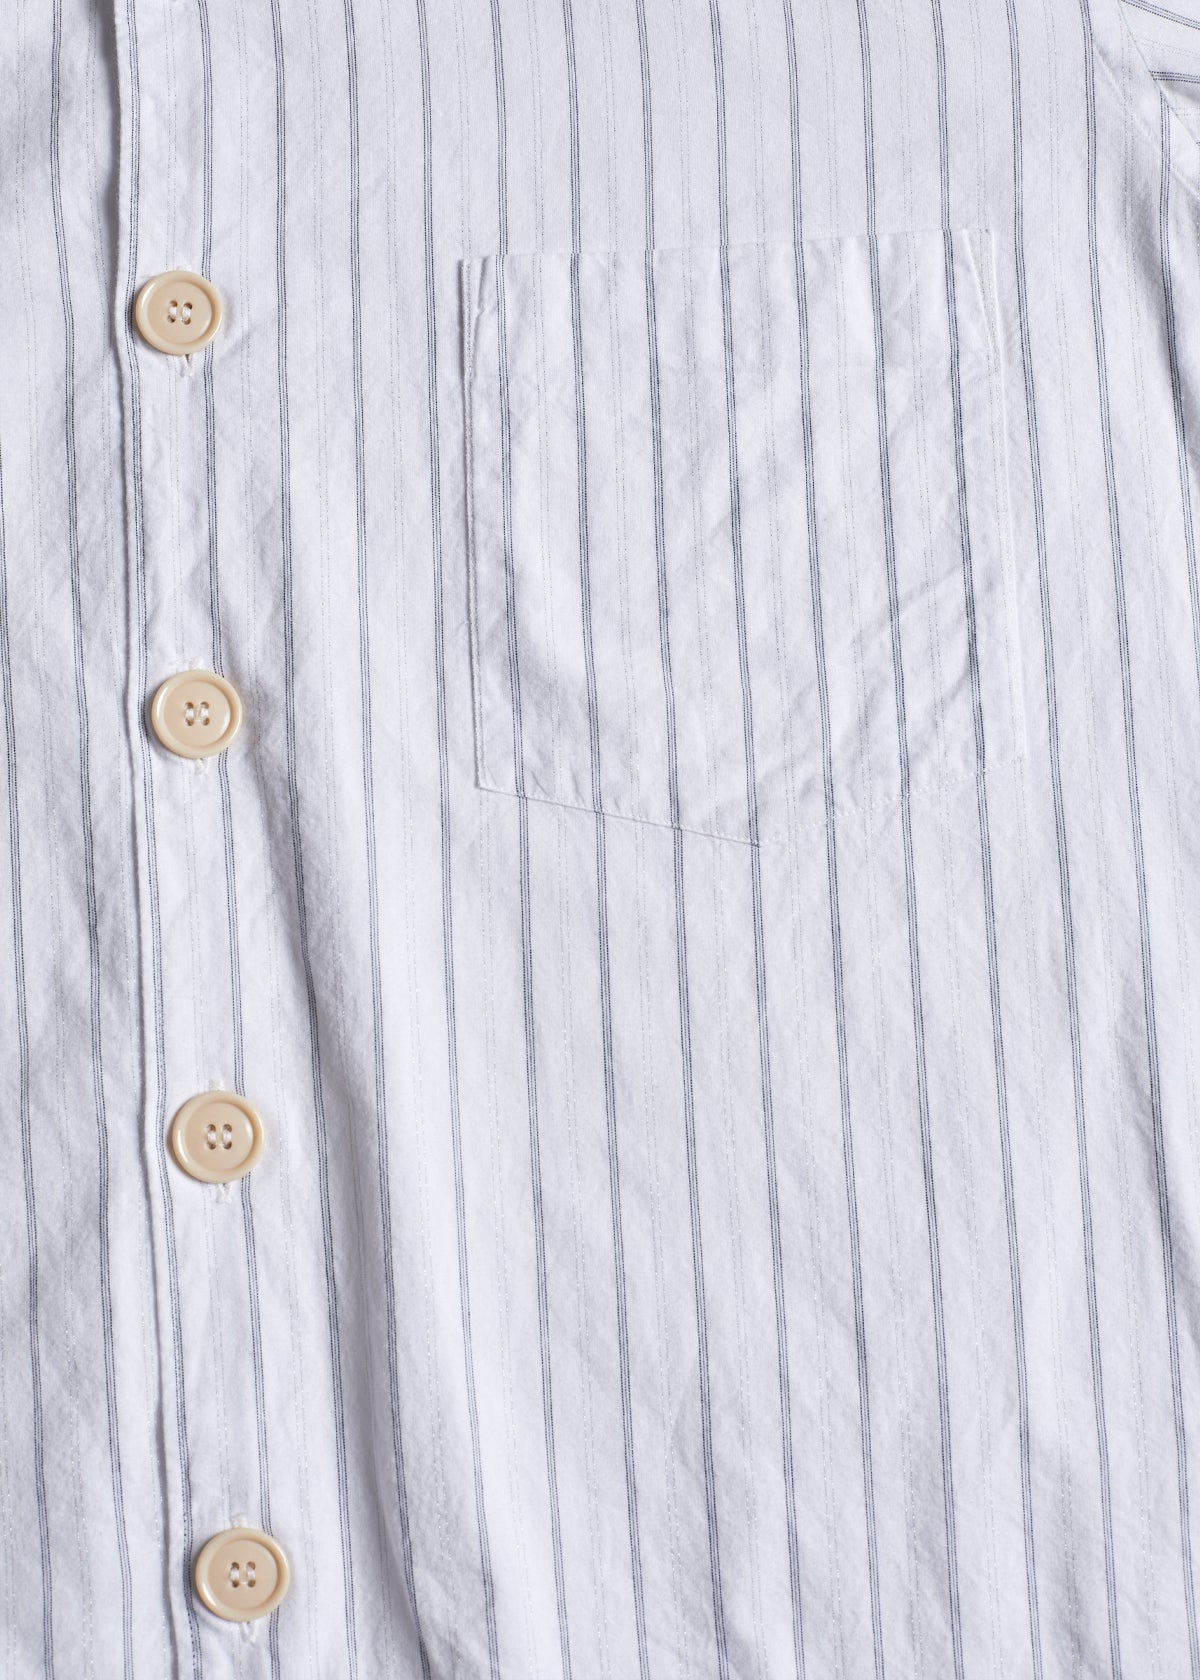 CDGH Big Buttons Stripped Shirt 2002 - Medium - The Archivist Store